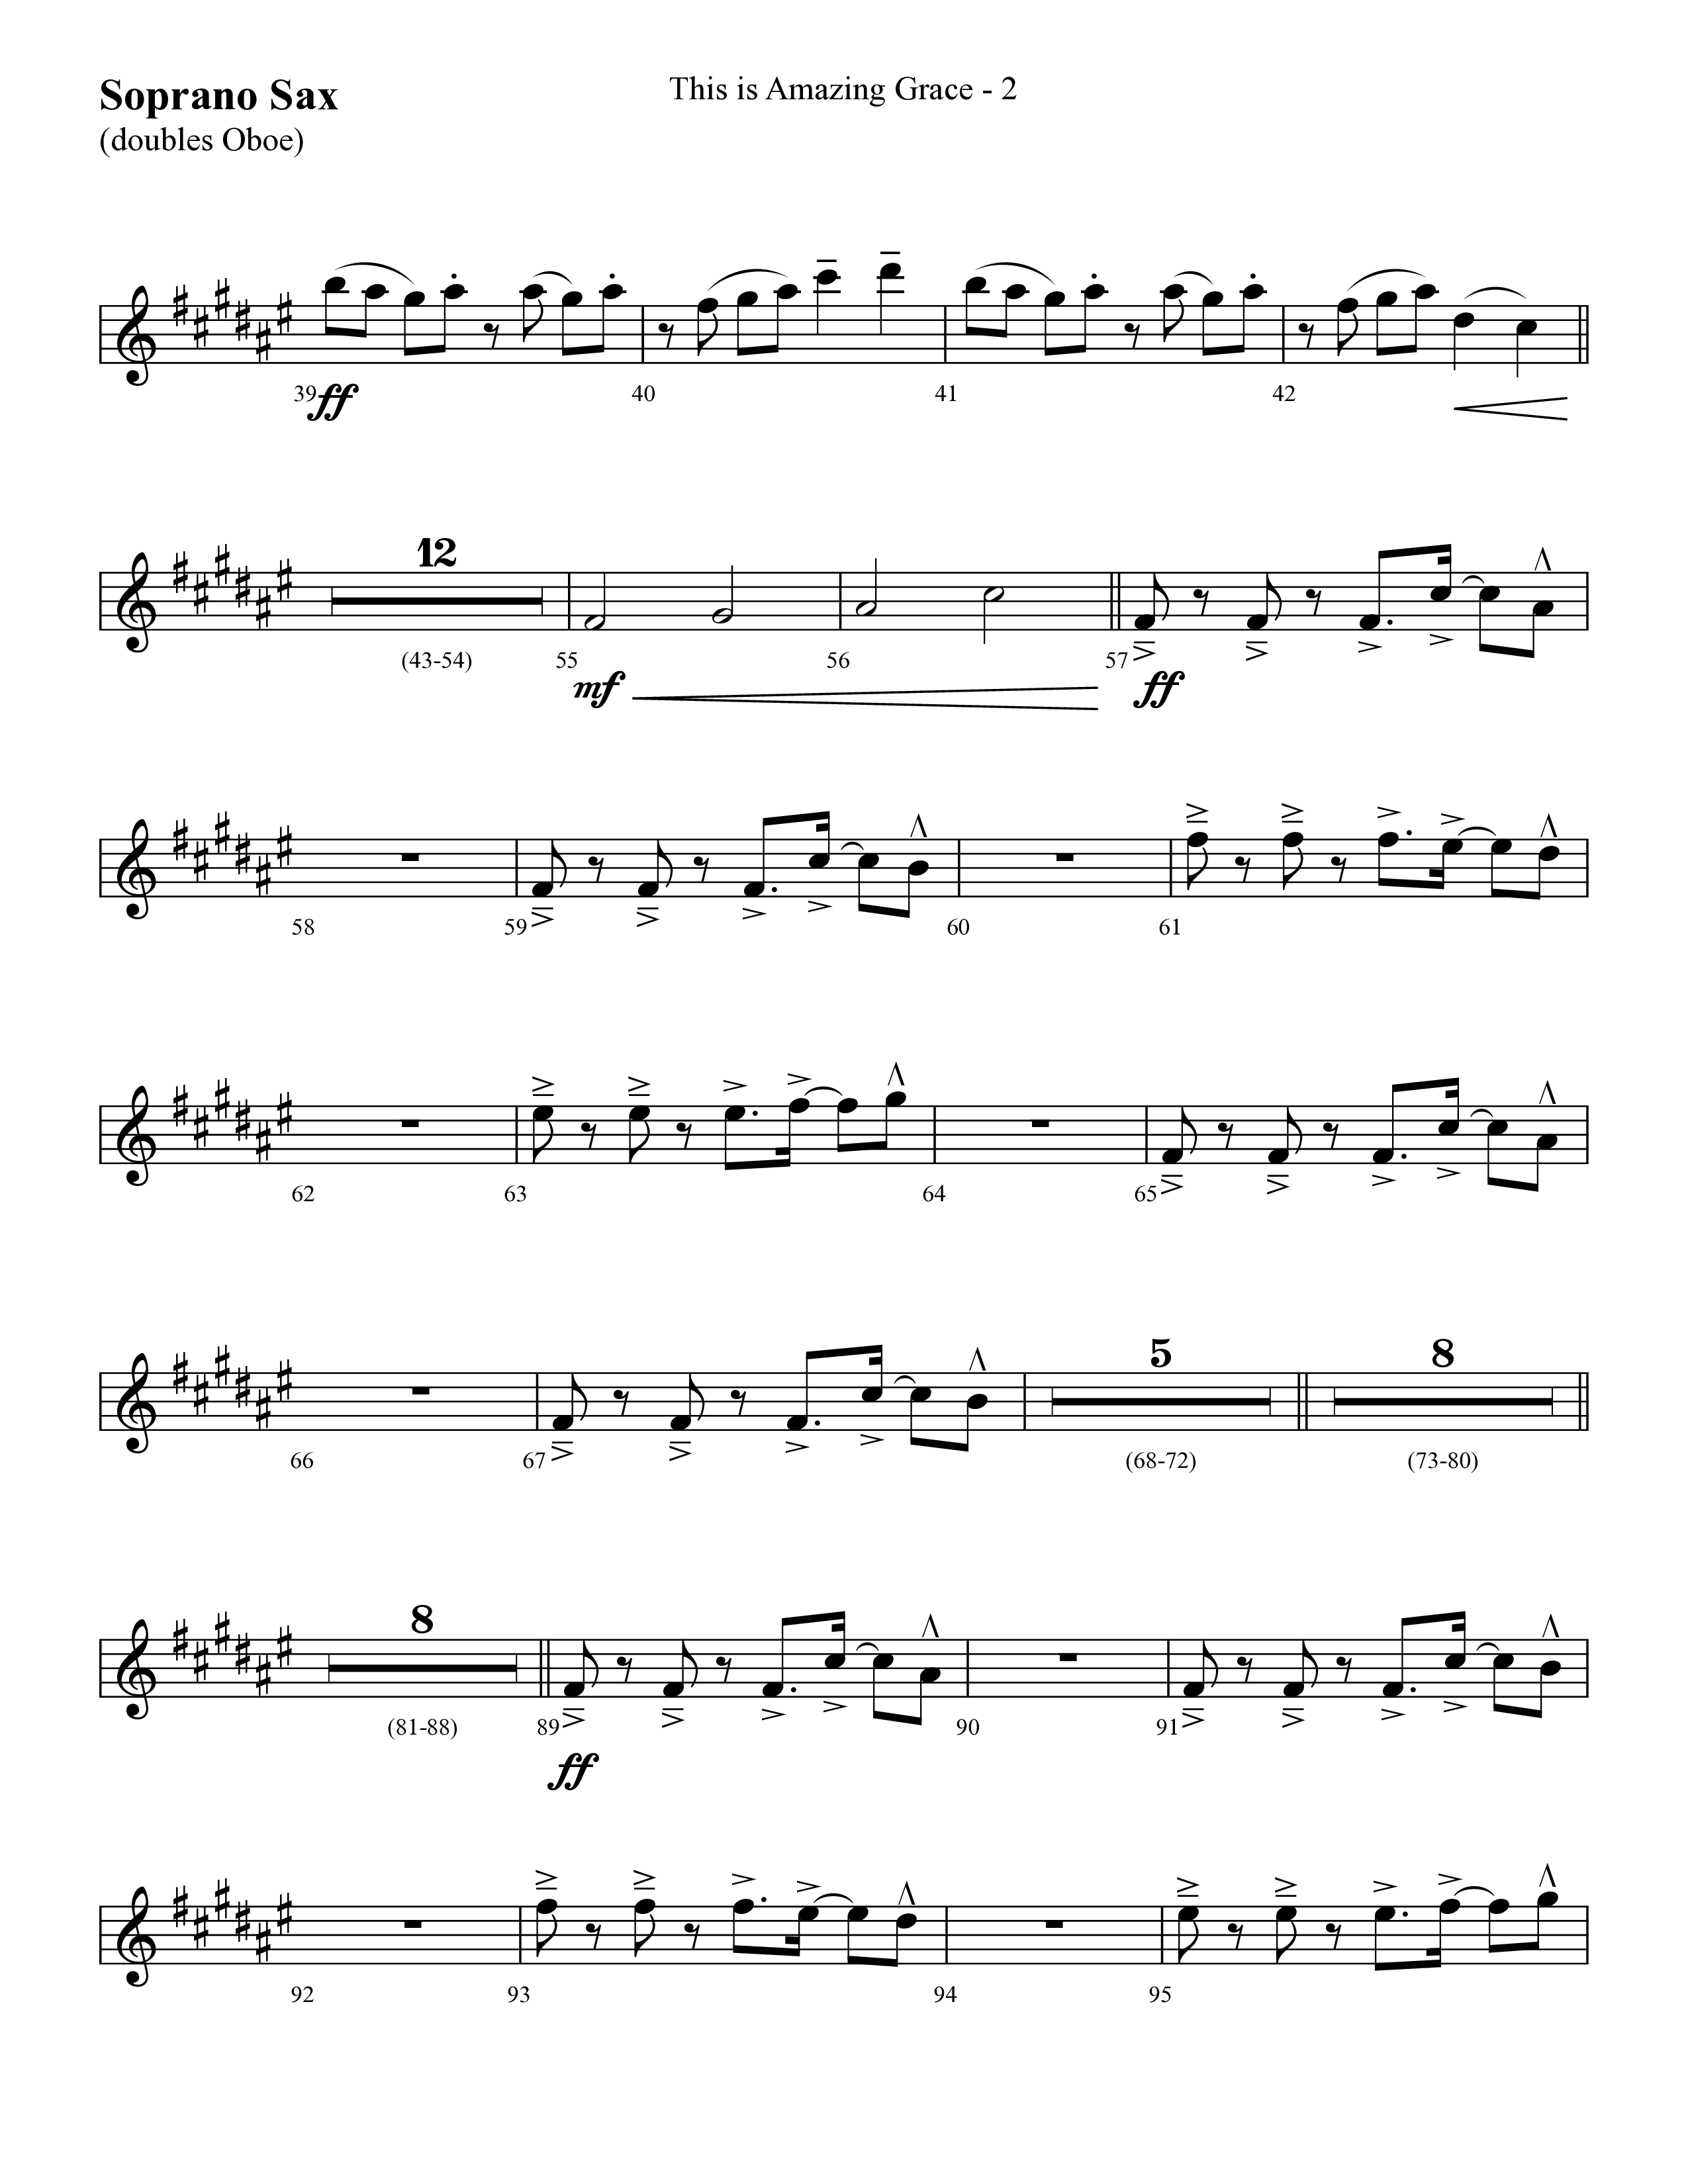 This Is Amazing Grace (Choral Anthem SATB) Soprano Sax (Lifeway Choral / Arr. Cliff Duren)